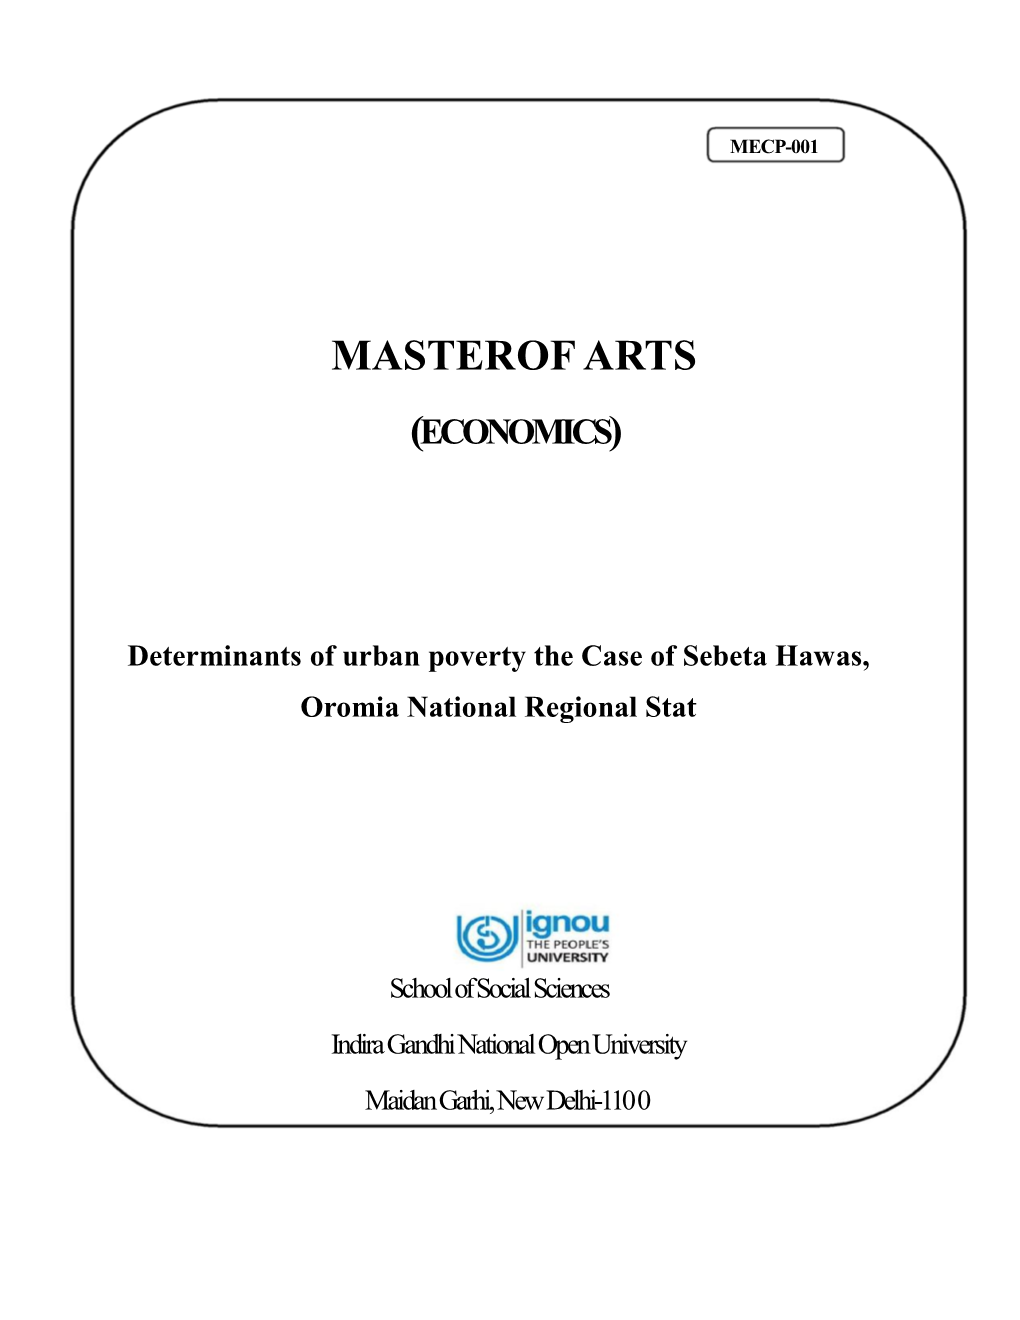 Masterof Arts (Economics)